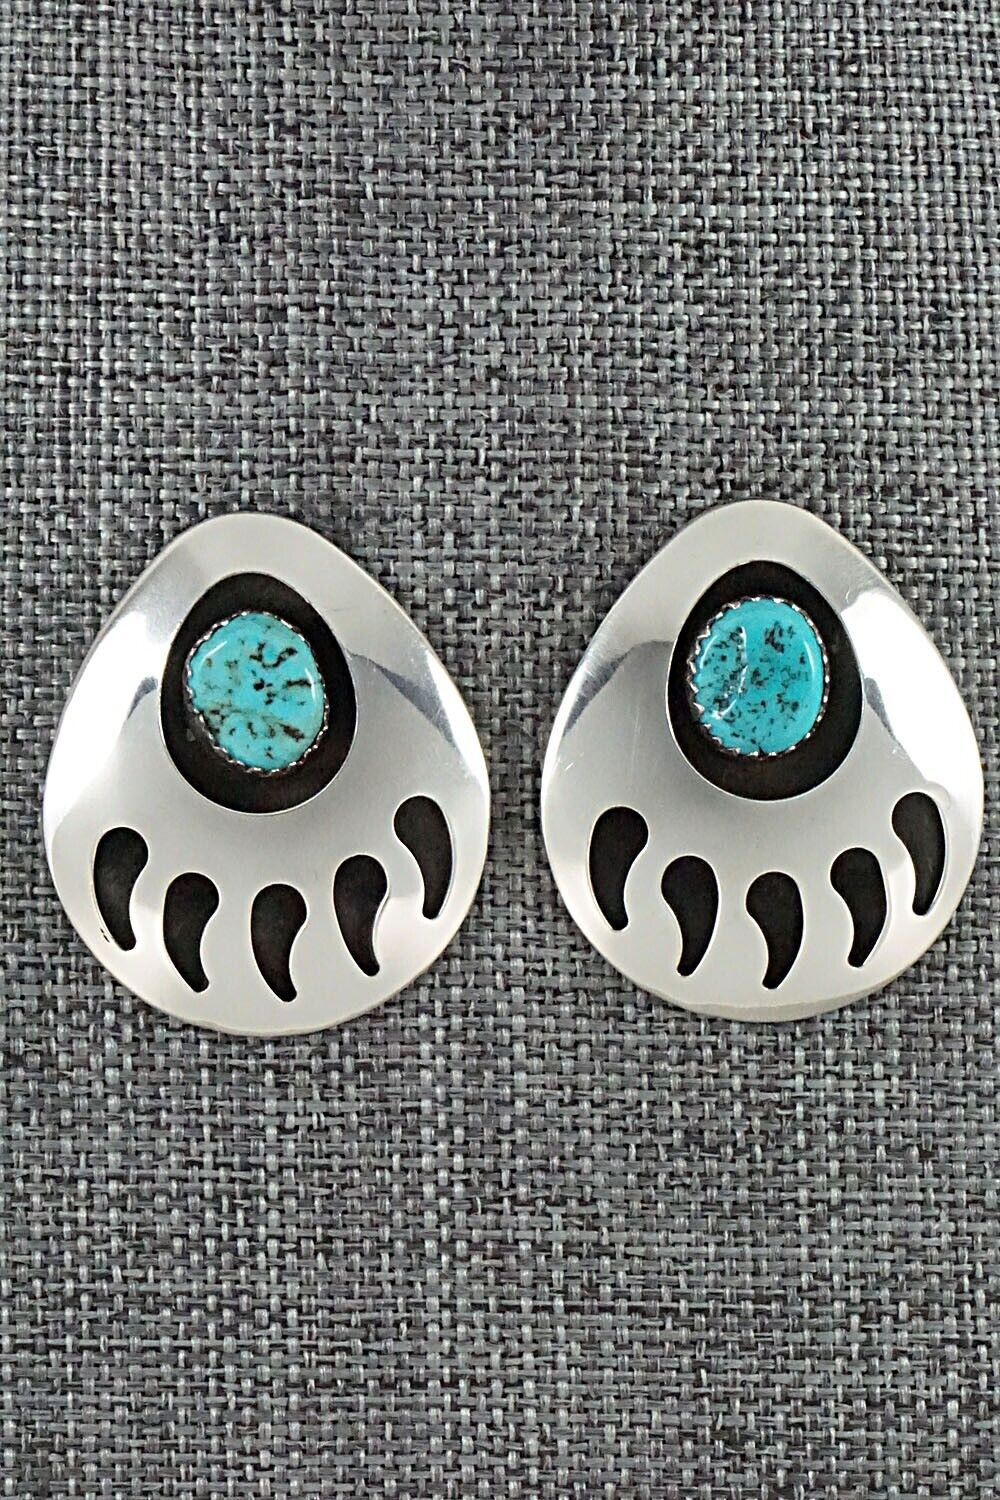 Turquoise & Sterling Silver Earrings - Virginia Long